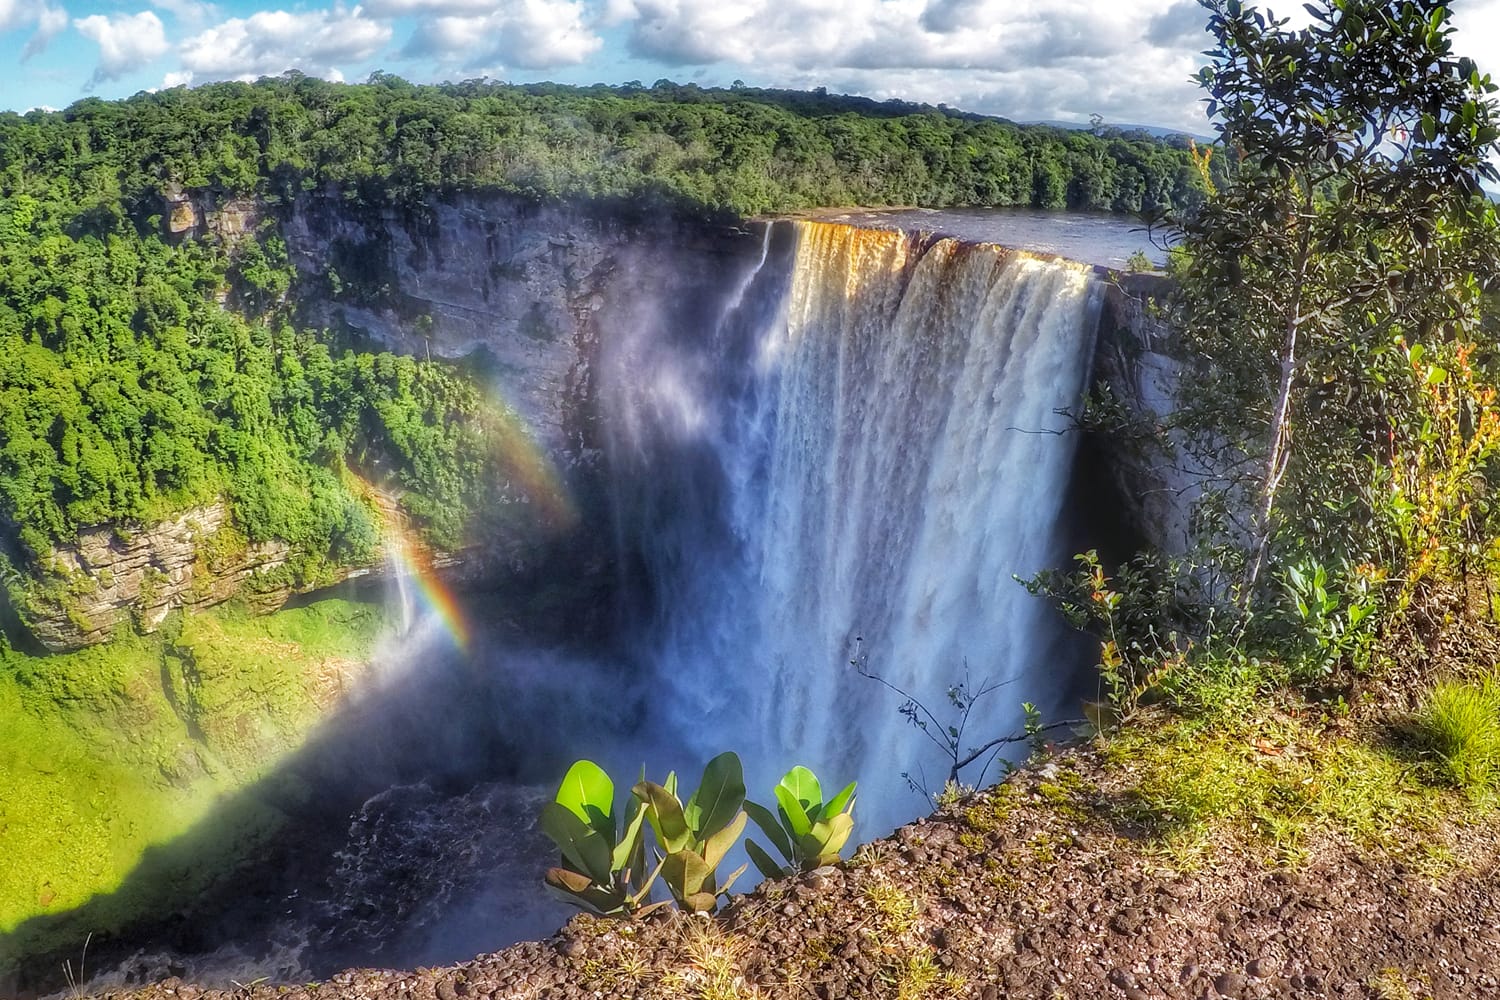 Keieteur Falls in Guyana